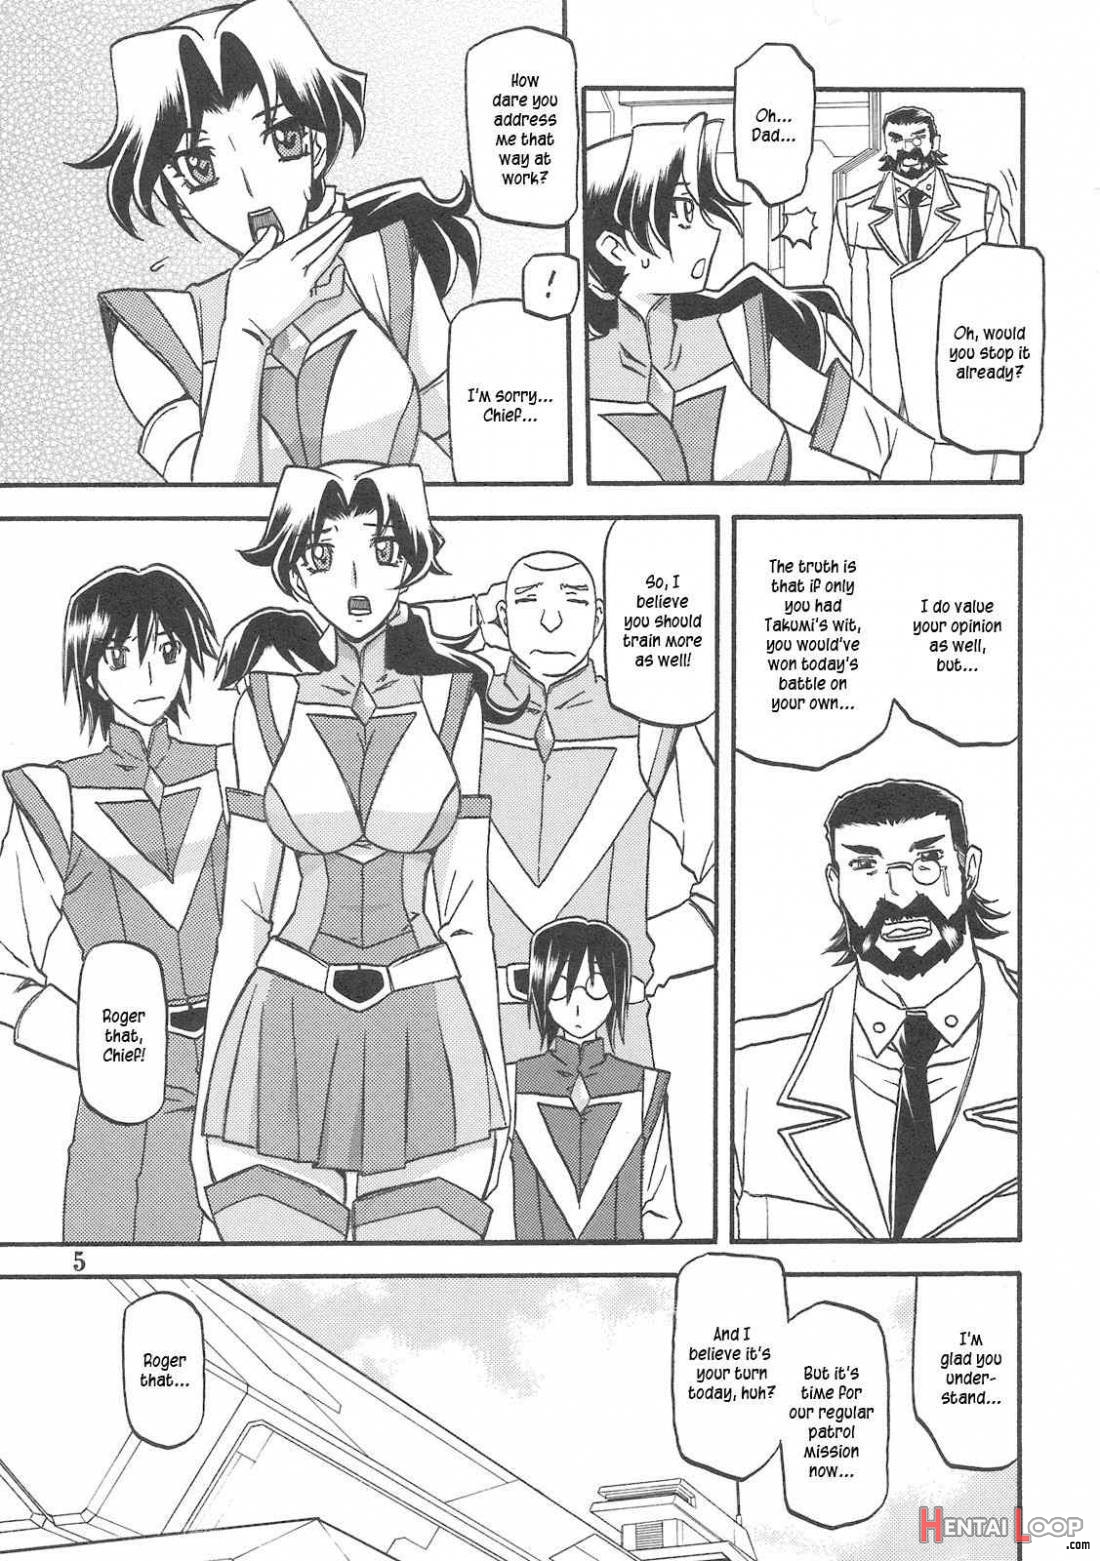 Delusion Miyuki page 4